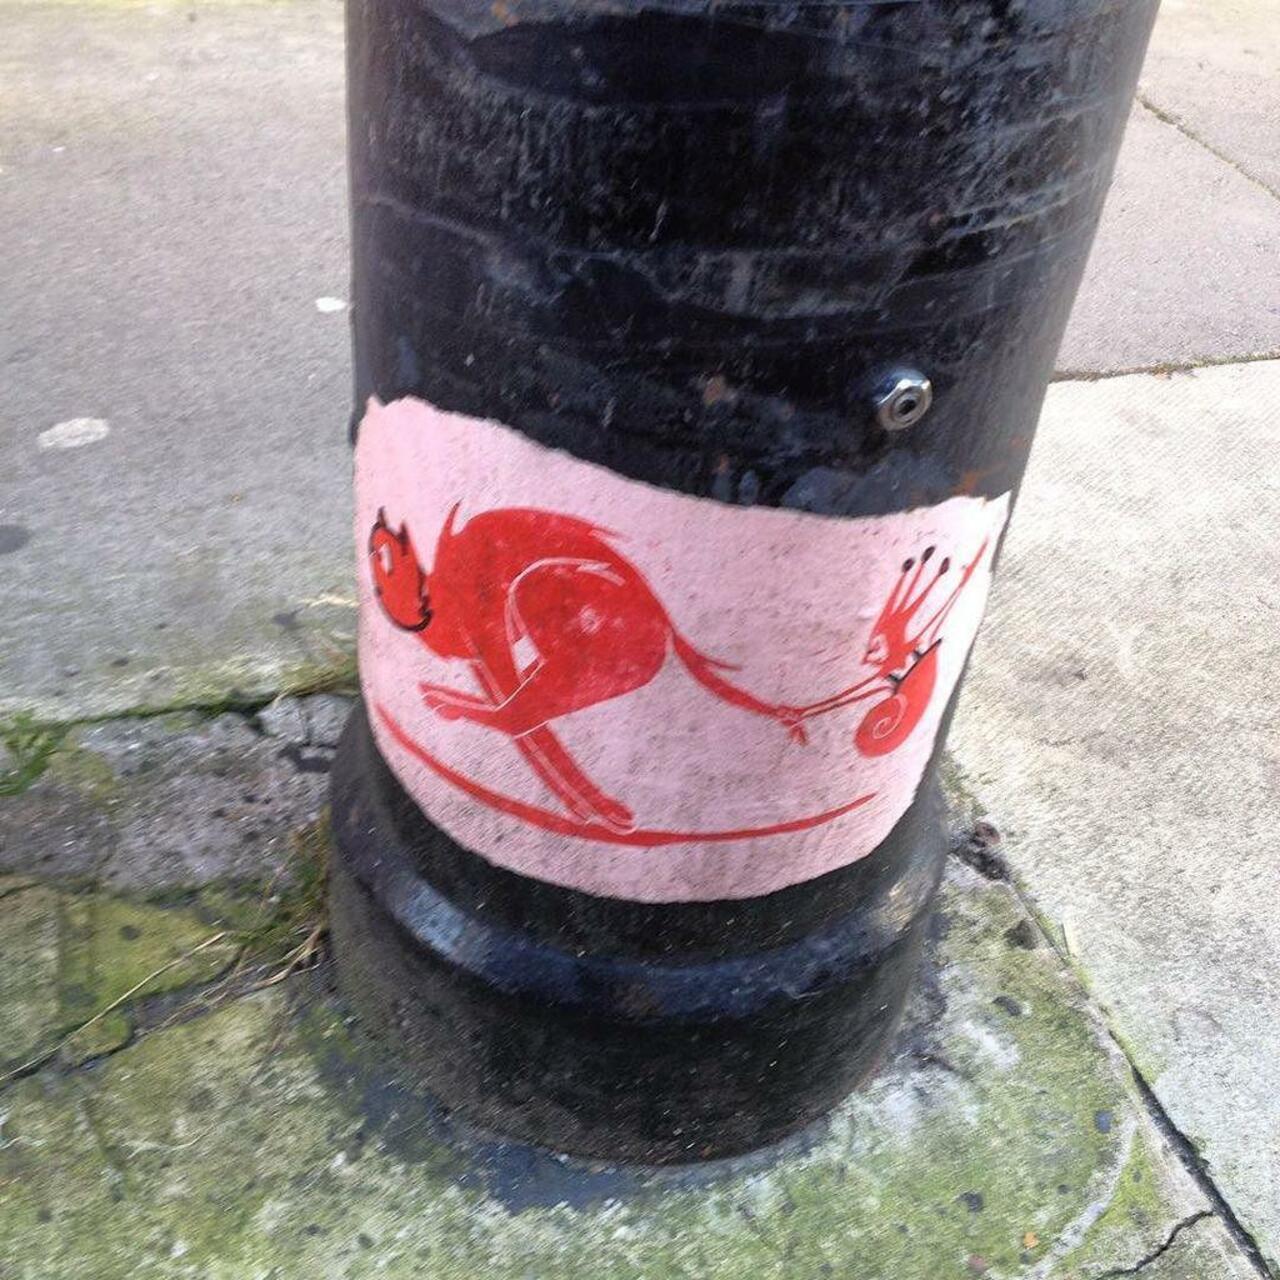 Pole running. #stickerart  #streetart #graffiti #streetartlondon #london #thisislondon by isadarko http://t.co/1IxRPF5k9t